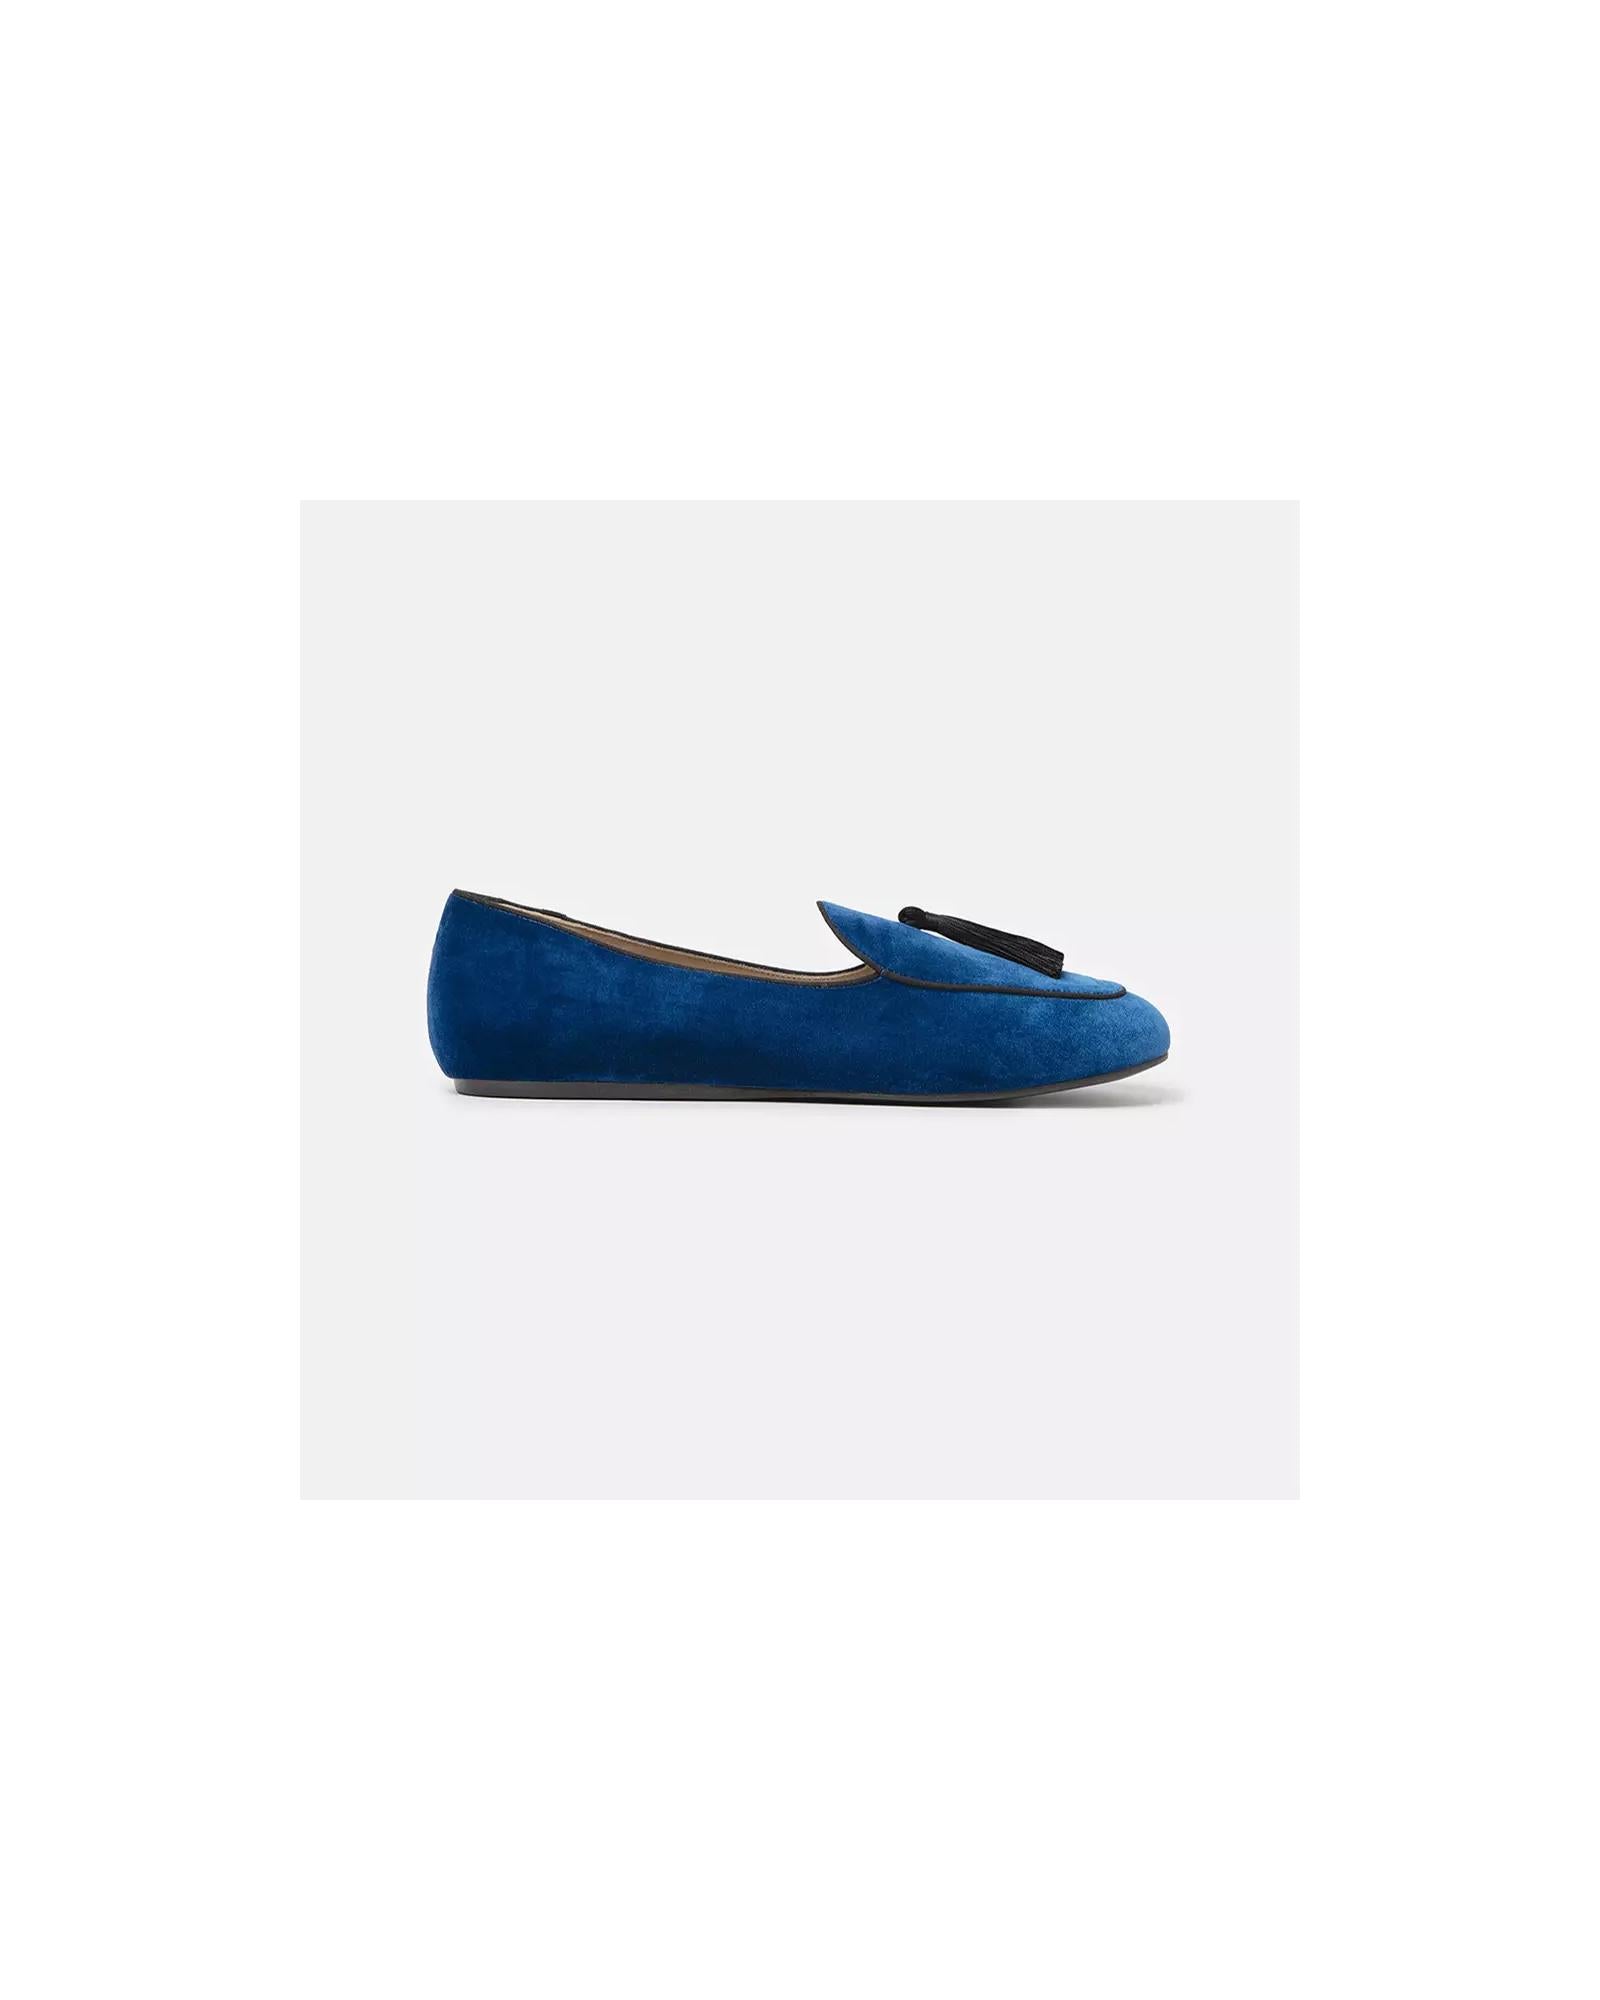 Handmade Unisex Charles Philip Loafers with Dark Blue Silk Fabric and Tassel 42.5 EU Men